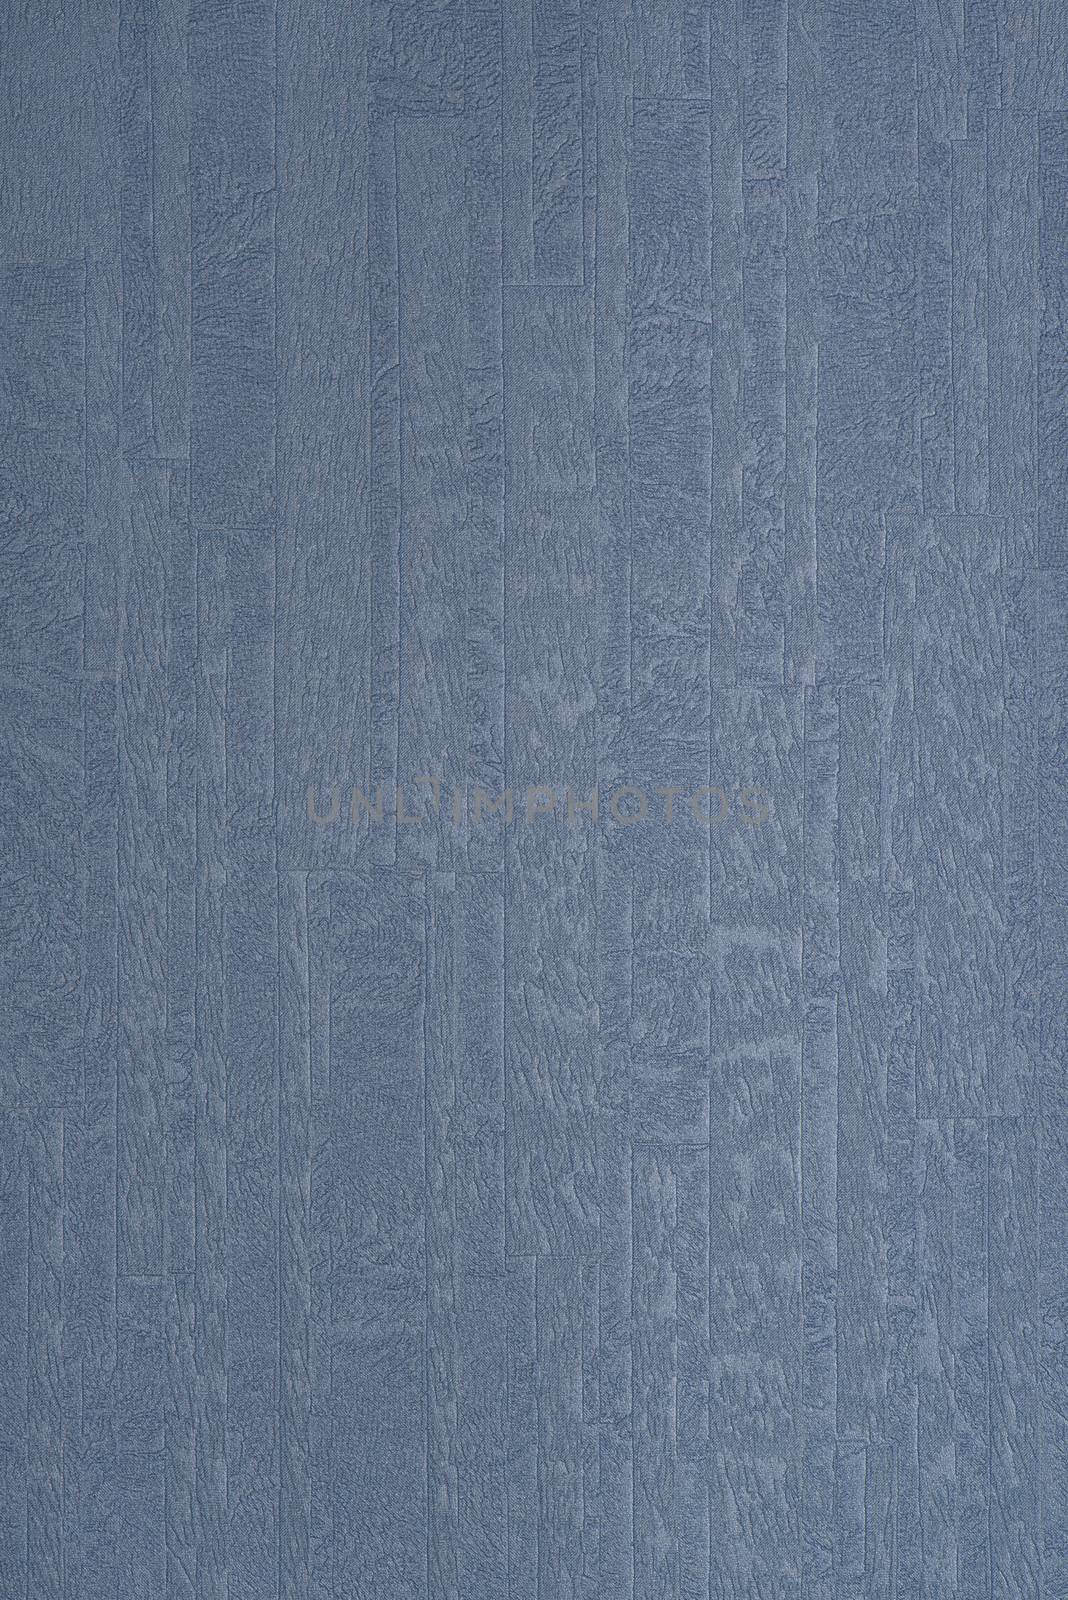 Wallpaper texture by homydesign